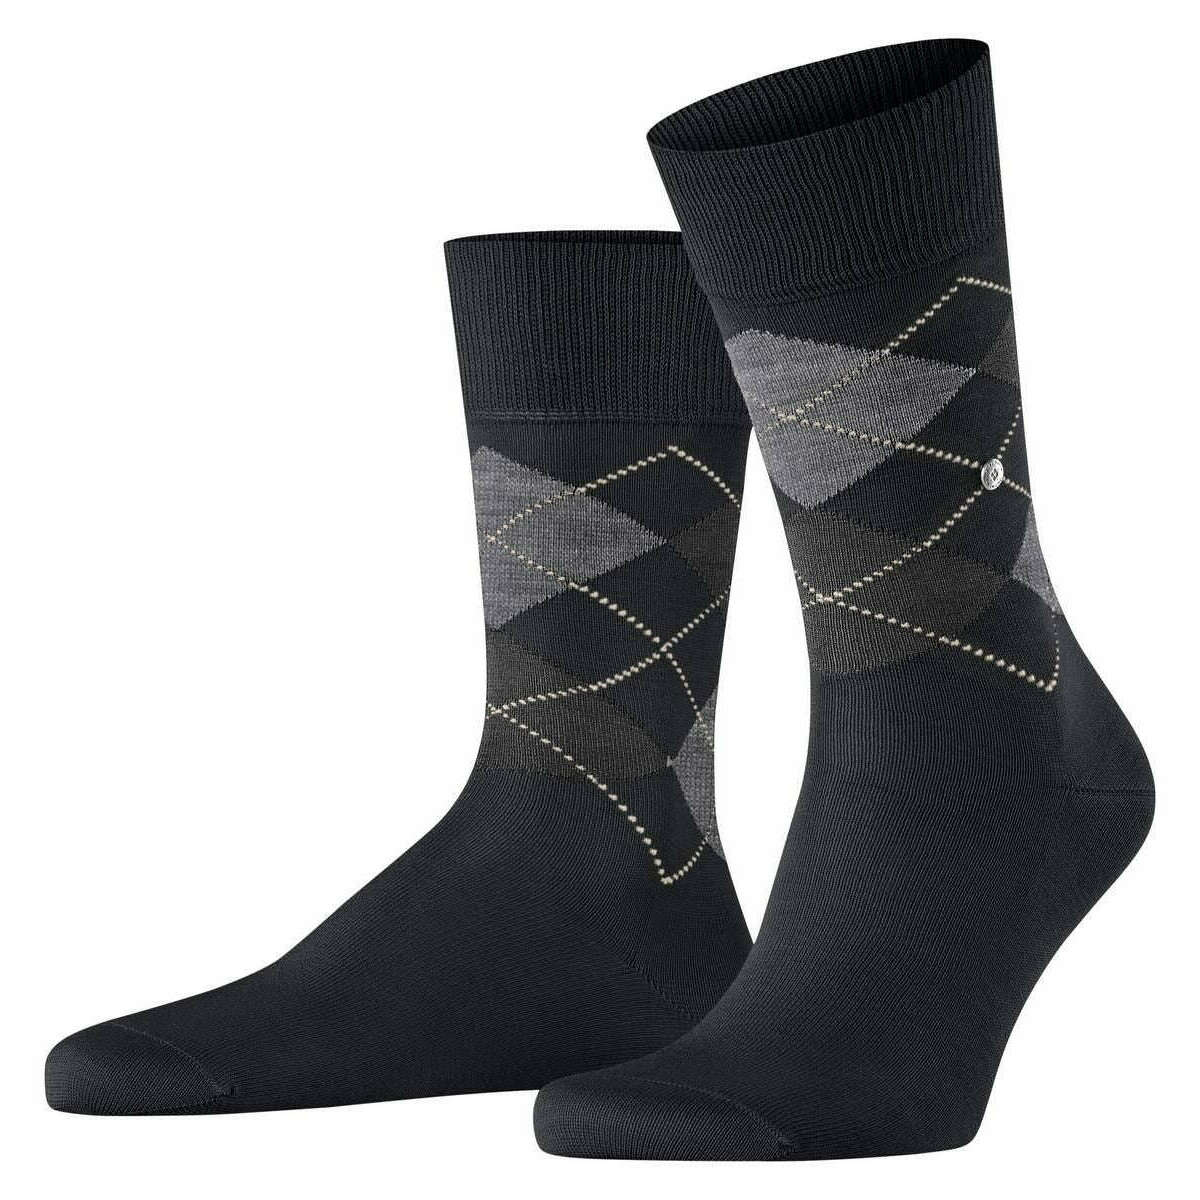 Burlington Manchester Socks - Black/Grey